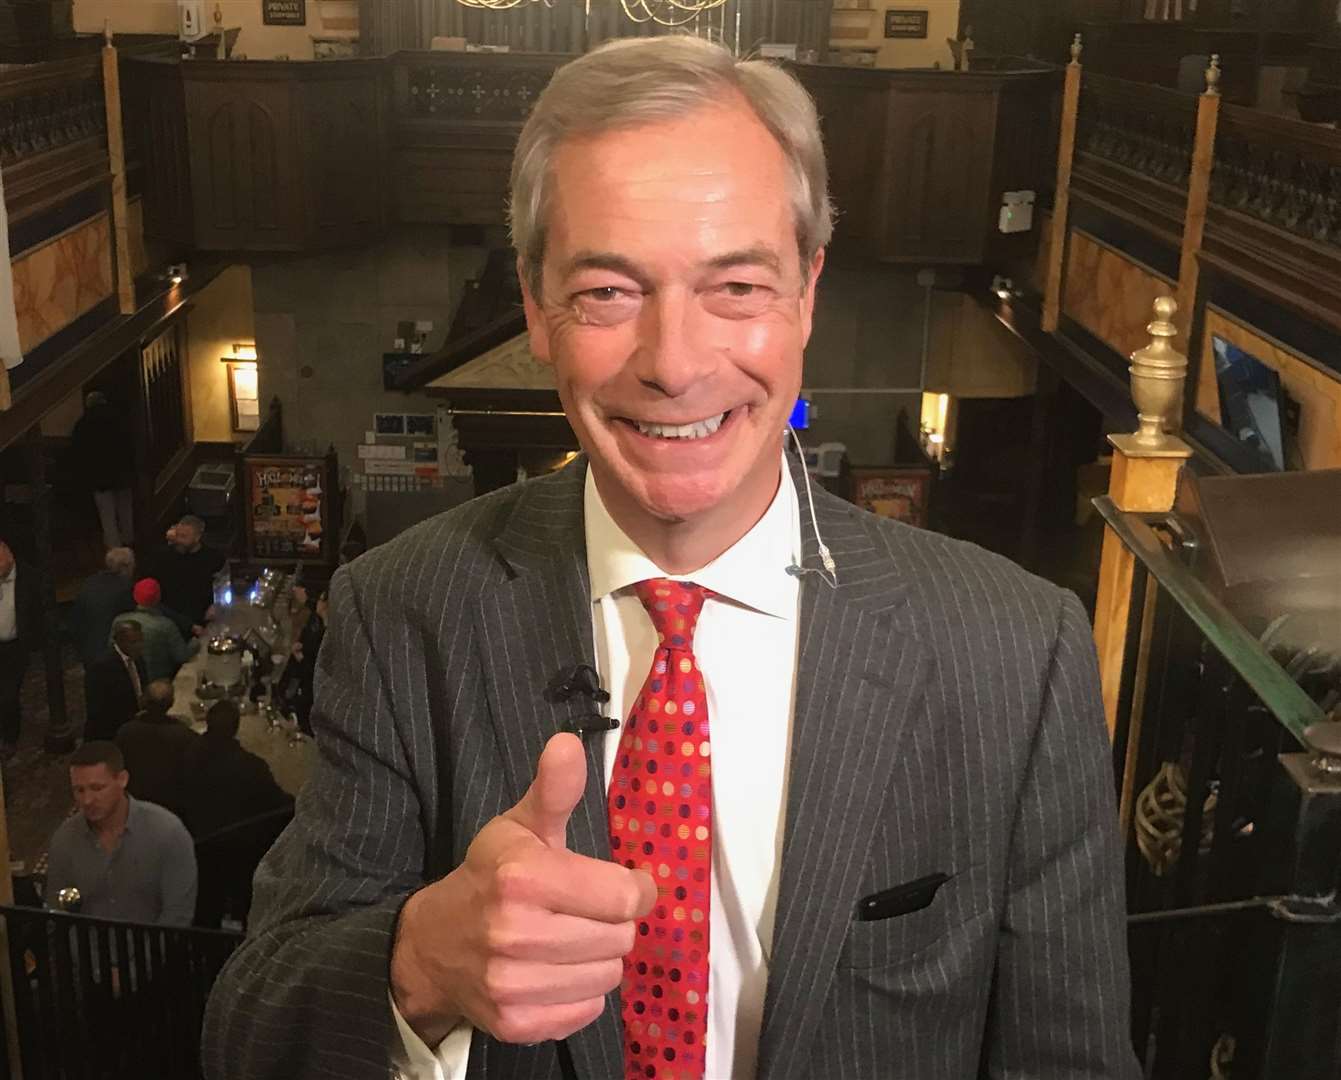 Nigel Farage hinted he could make a comeback